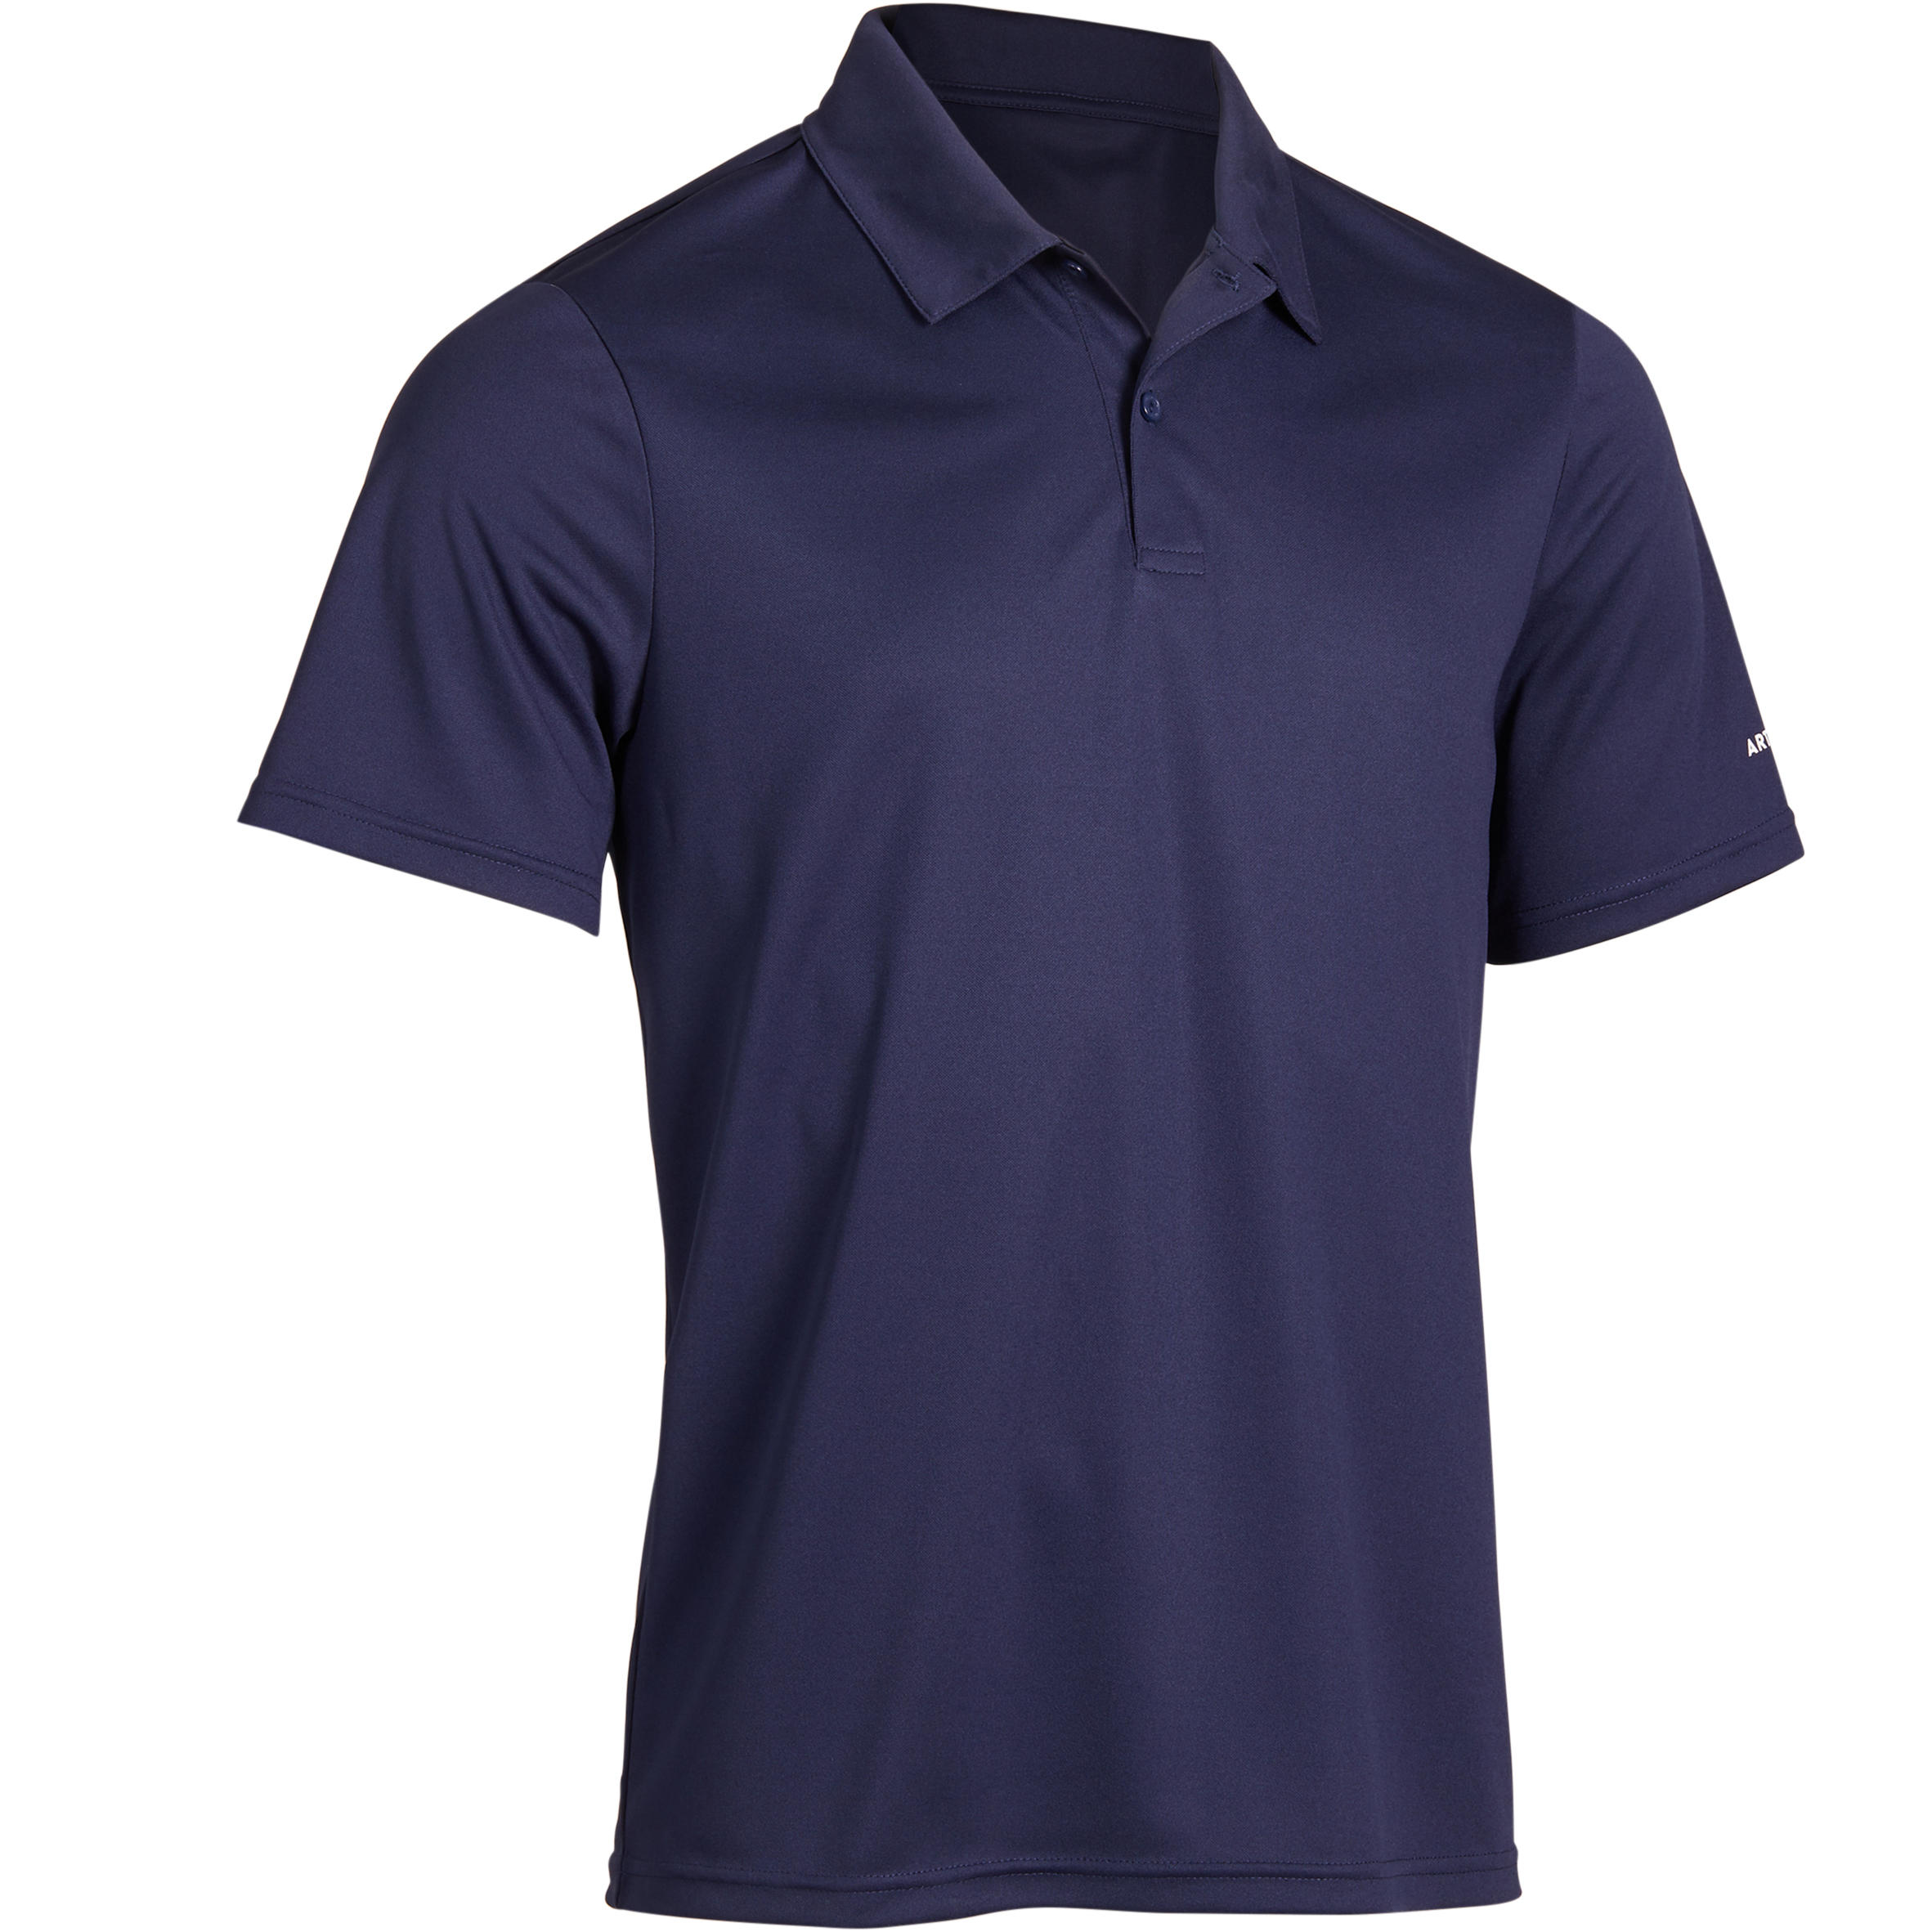 MEN FASHION Shirts & T-shirts Sports Decathlon T-shirt Gray M discount 69% 